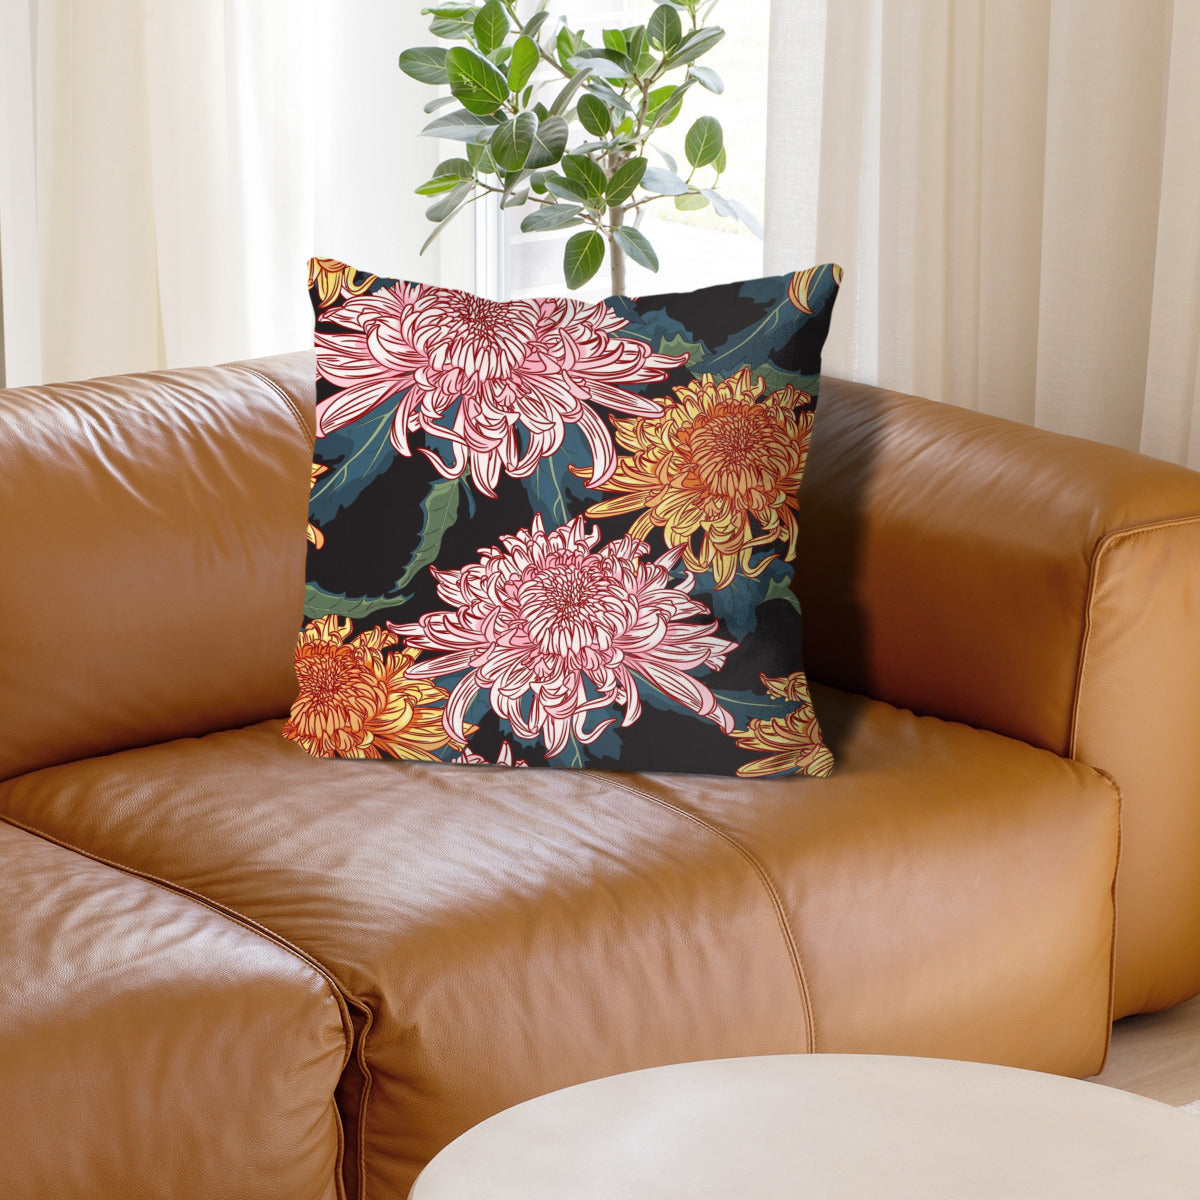 Throw pillow - Fibrant flowers design